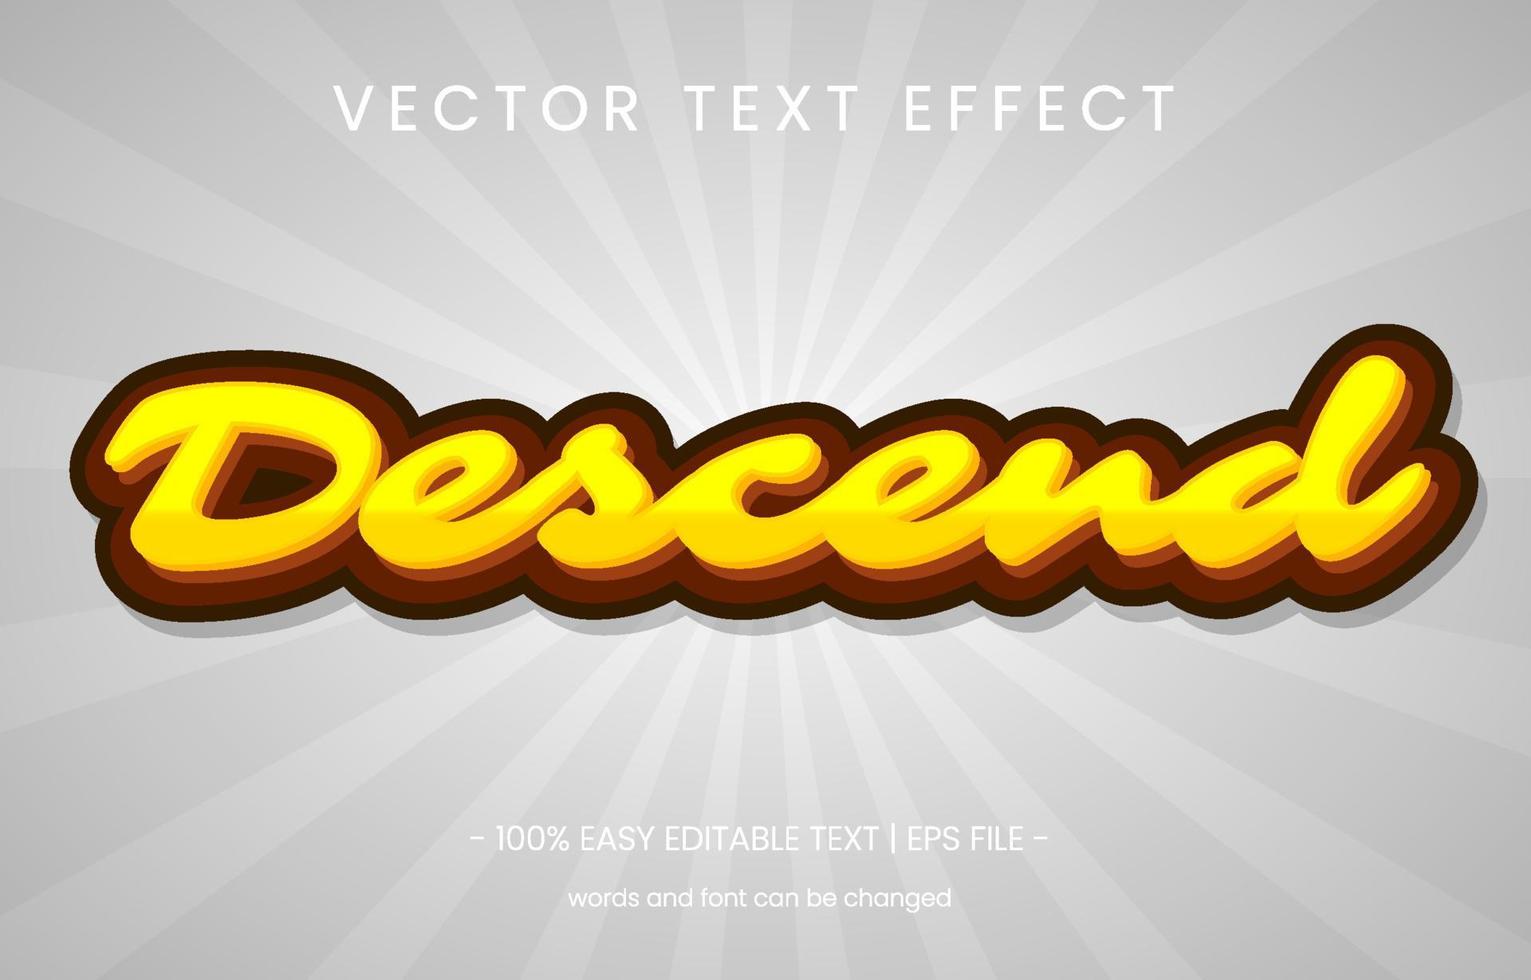 panel de estilo gráfico de efecto de texto descendente vector